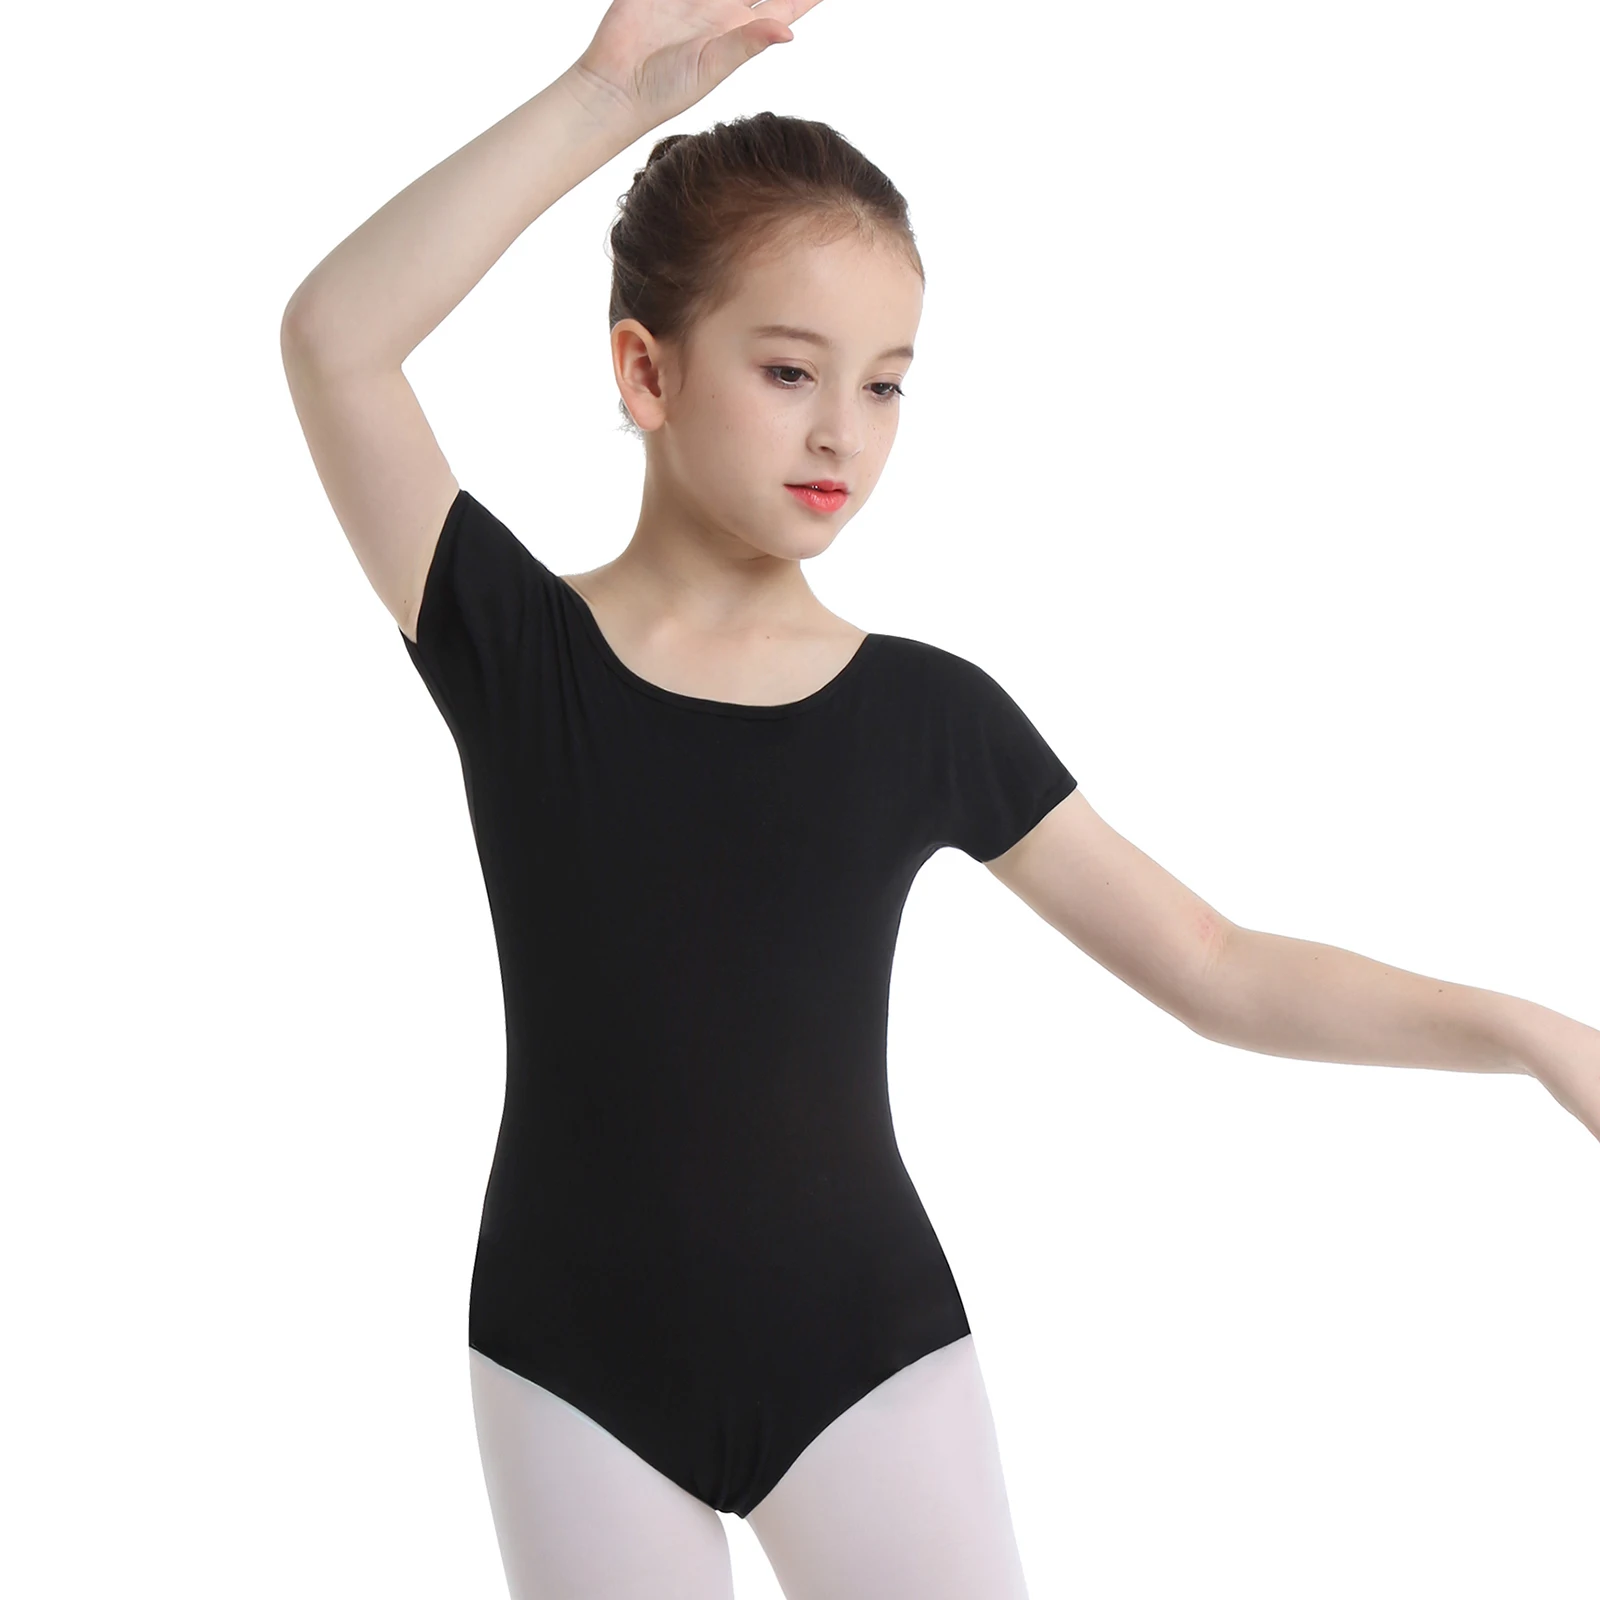 Kids Girls Ballet Leotard Cotton Short Sleeves Bodysuit Dancewear Gymnastics Leotard Dancing Costumes Outfit